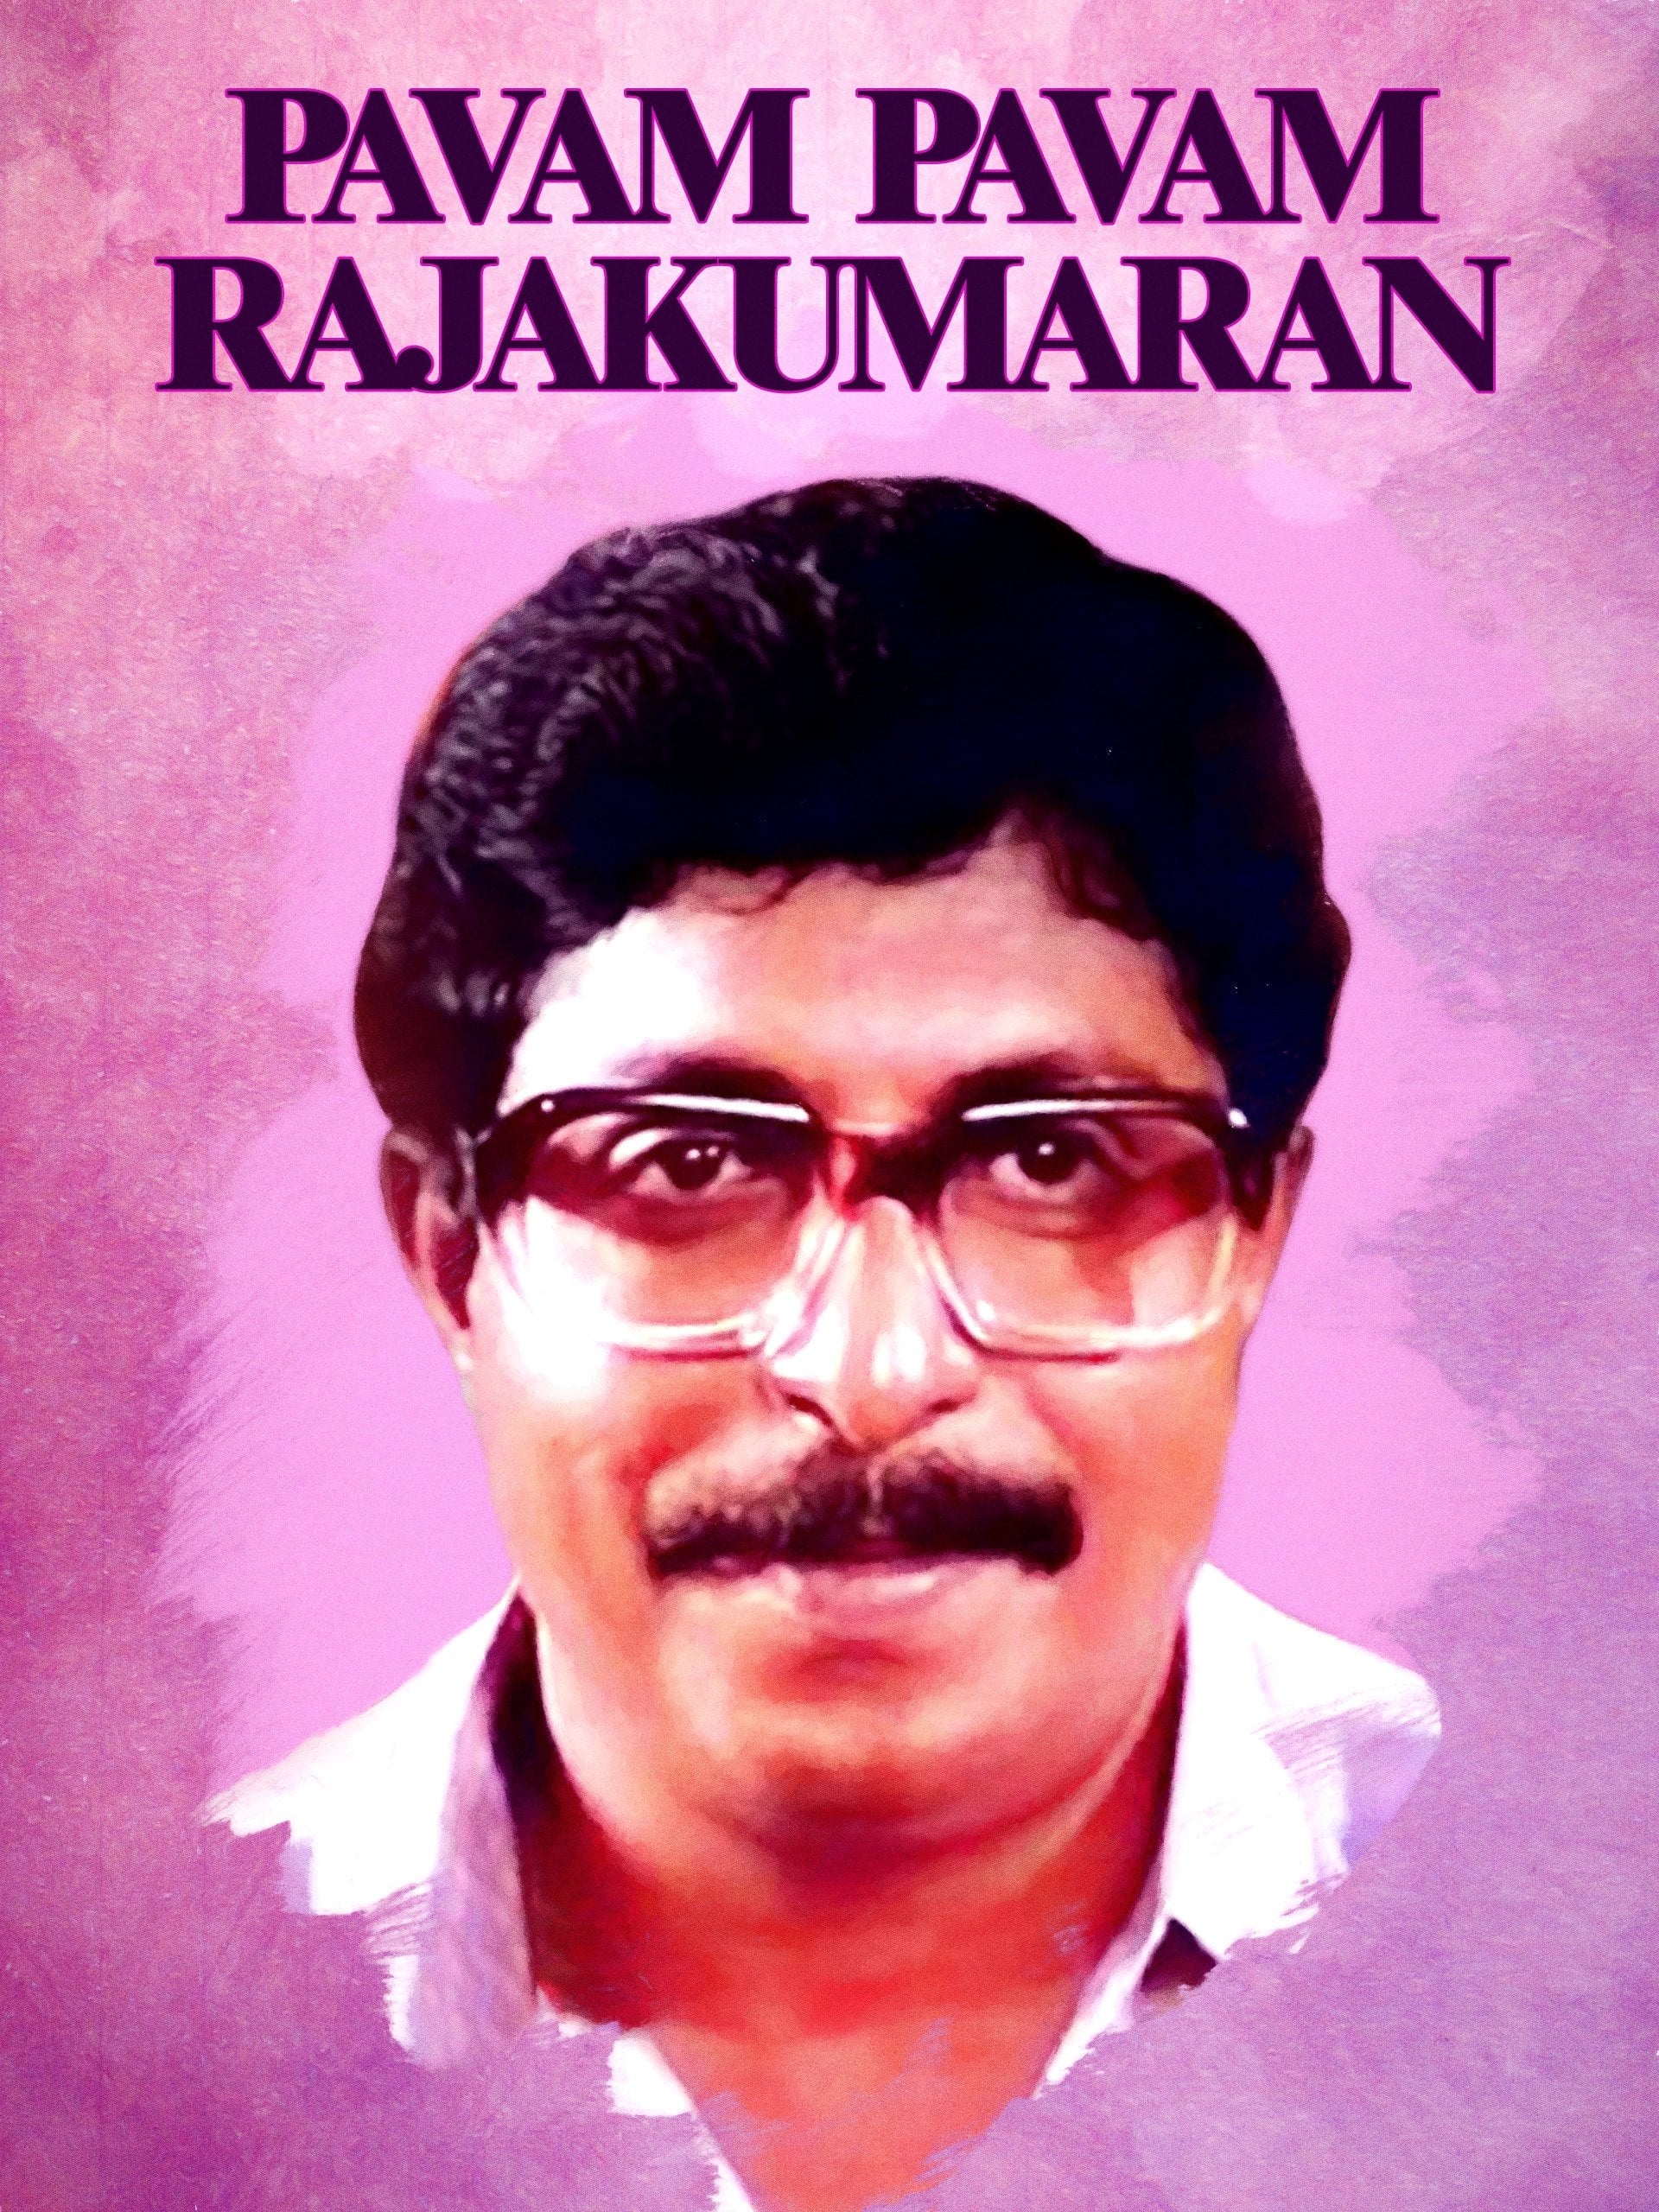 Paavam Paavam Rajakumaran